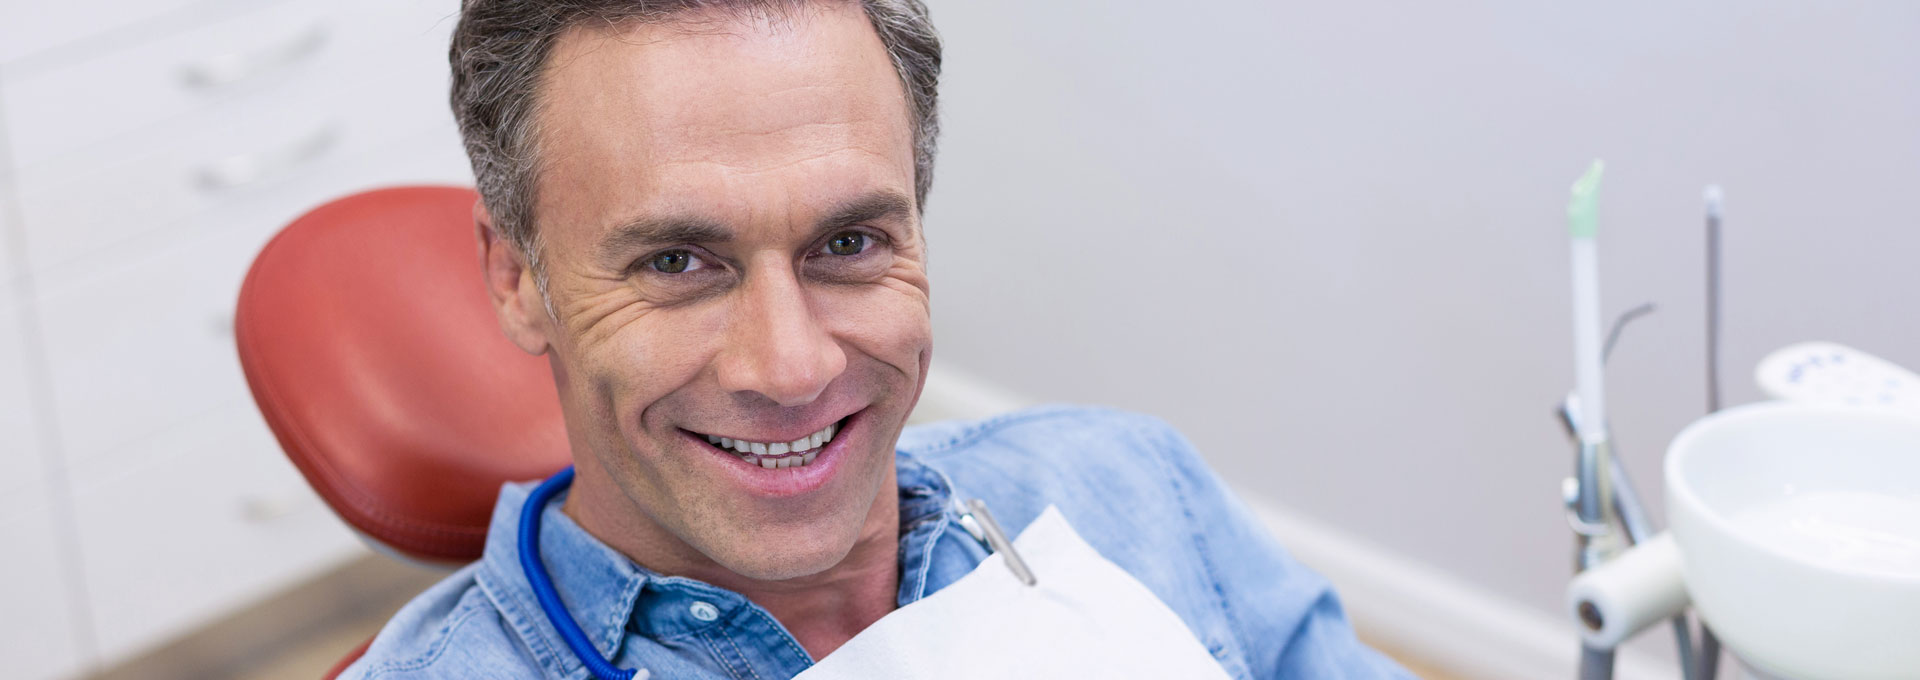 Man getting ready for dental implants treatment